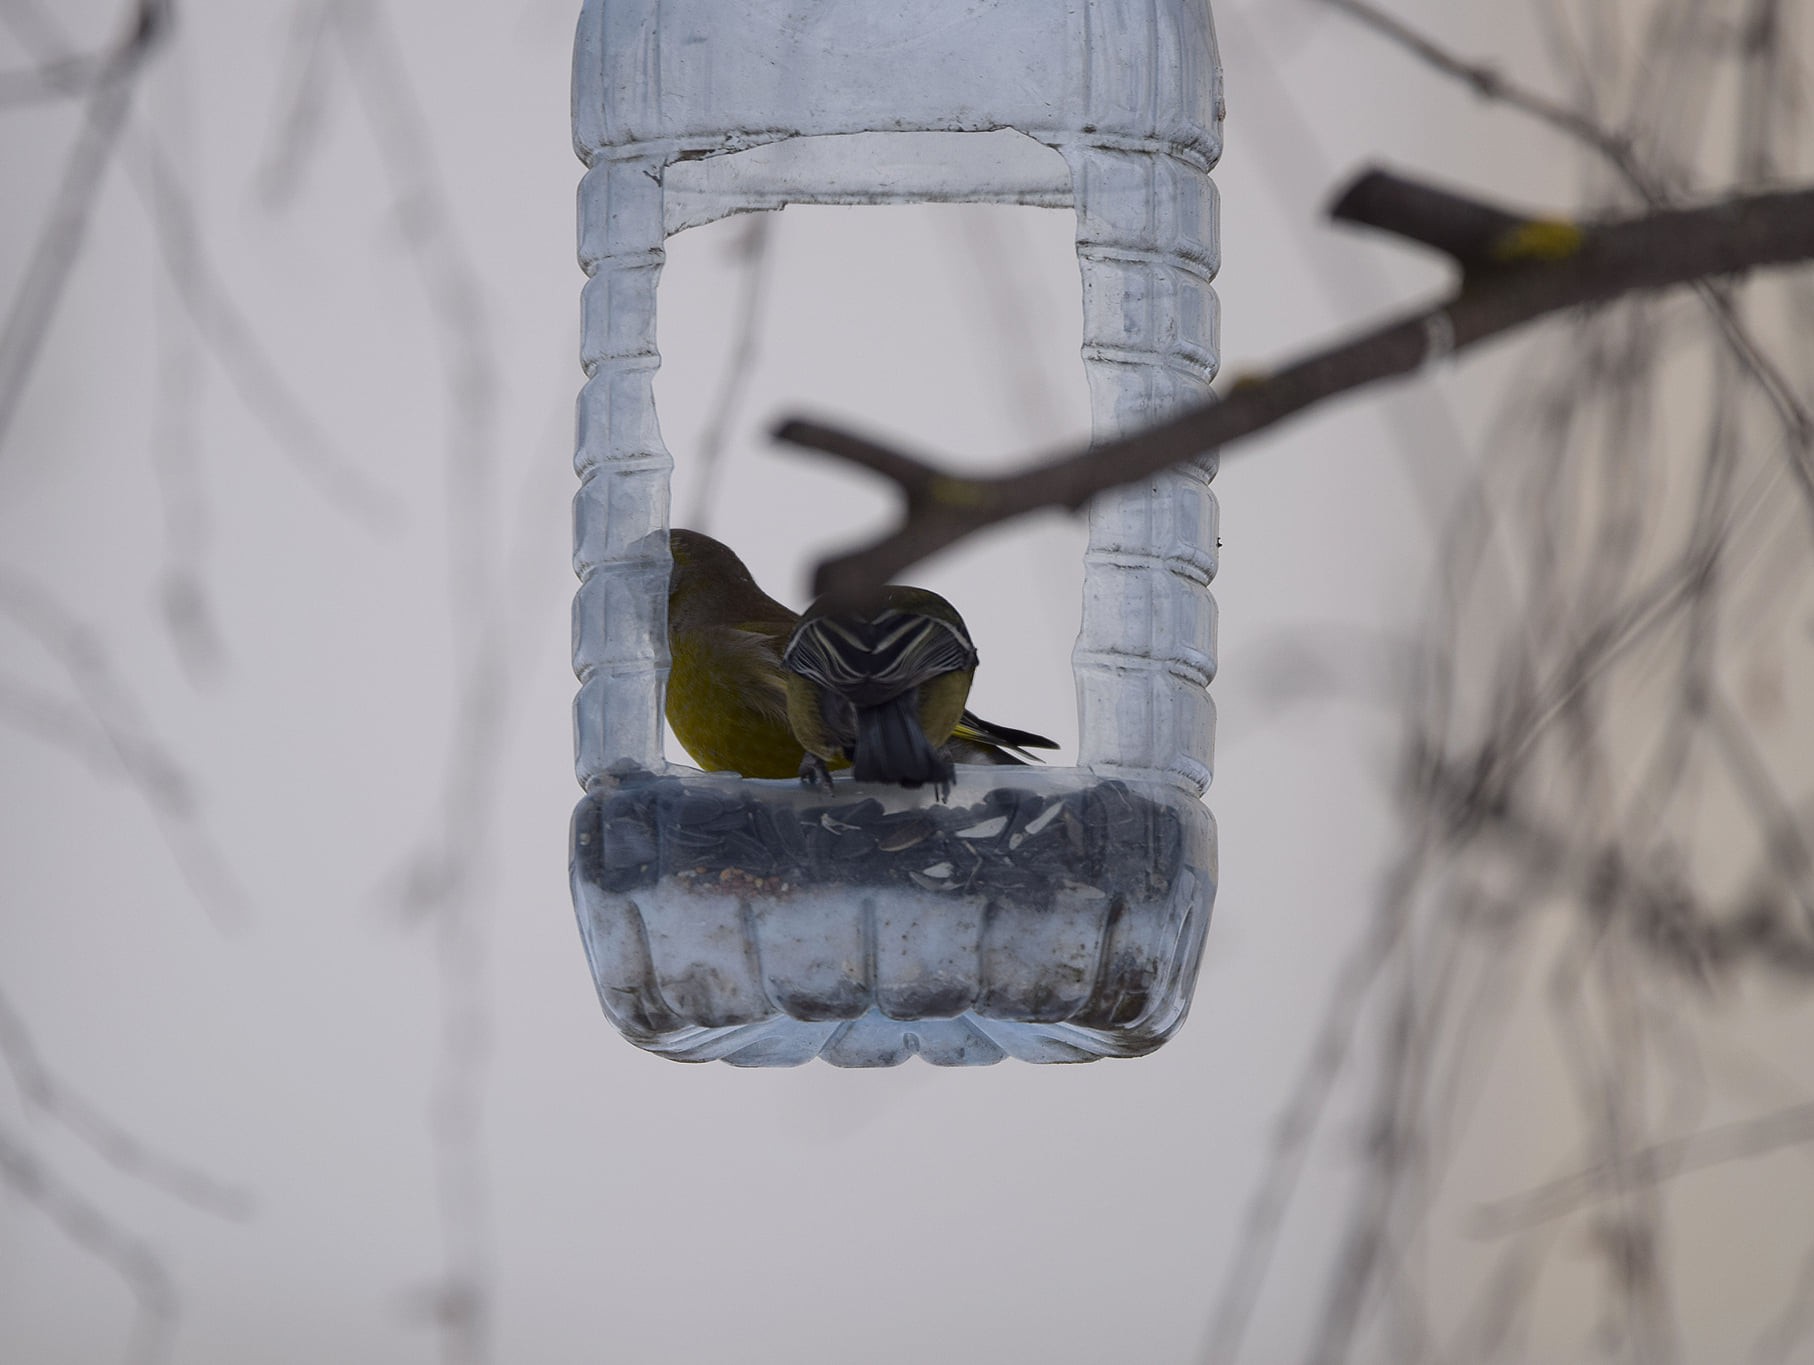 Сделать кормушку из бутылки для птиц своими руками (41 фото)